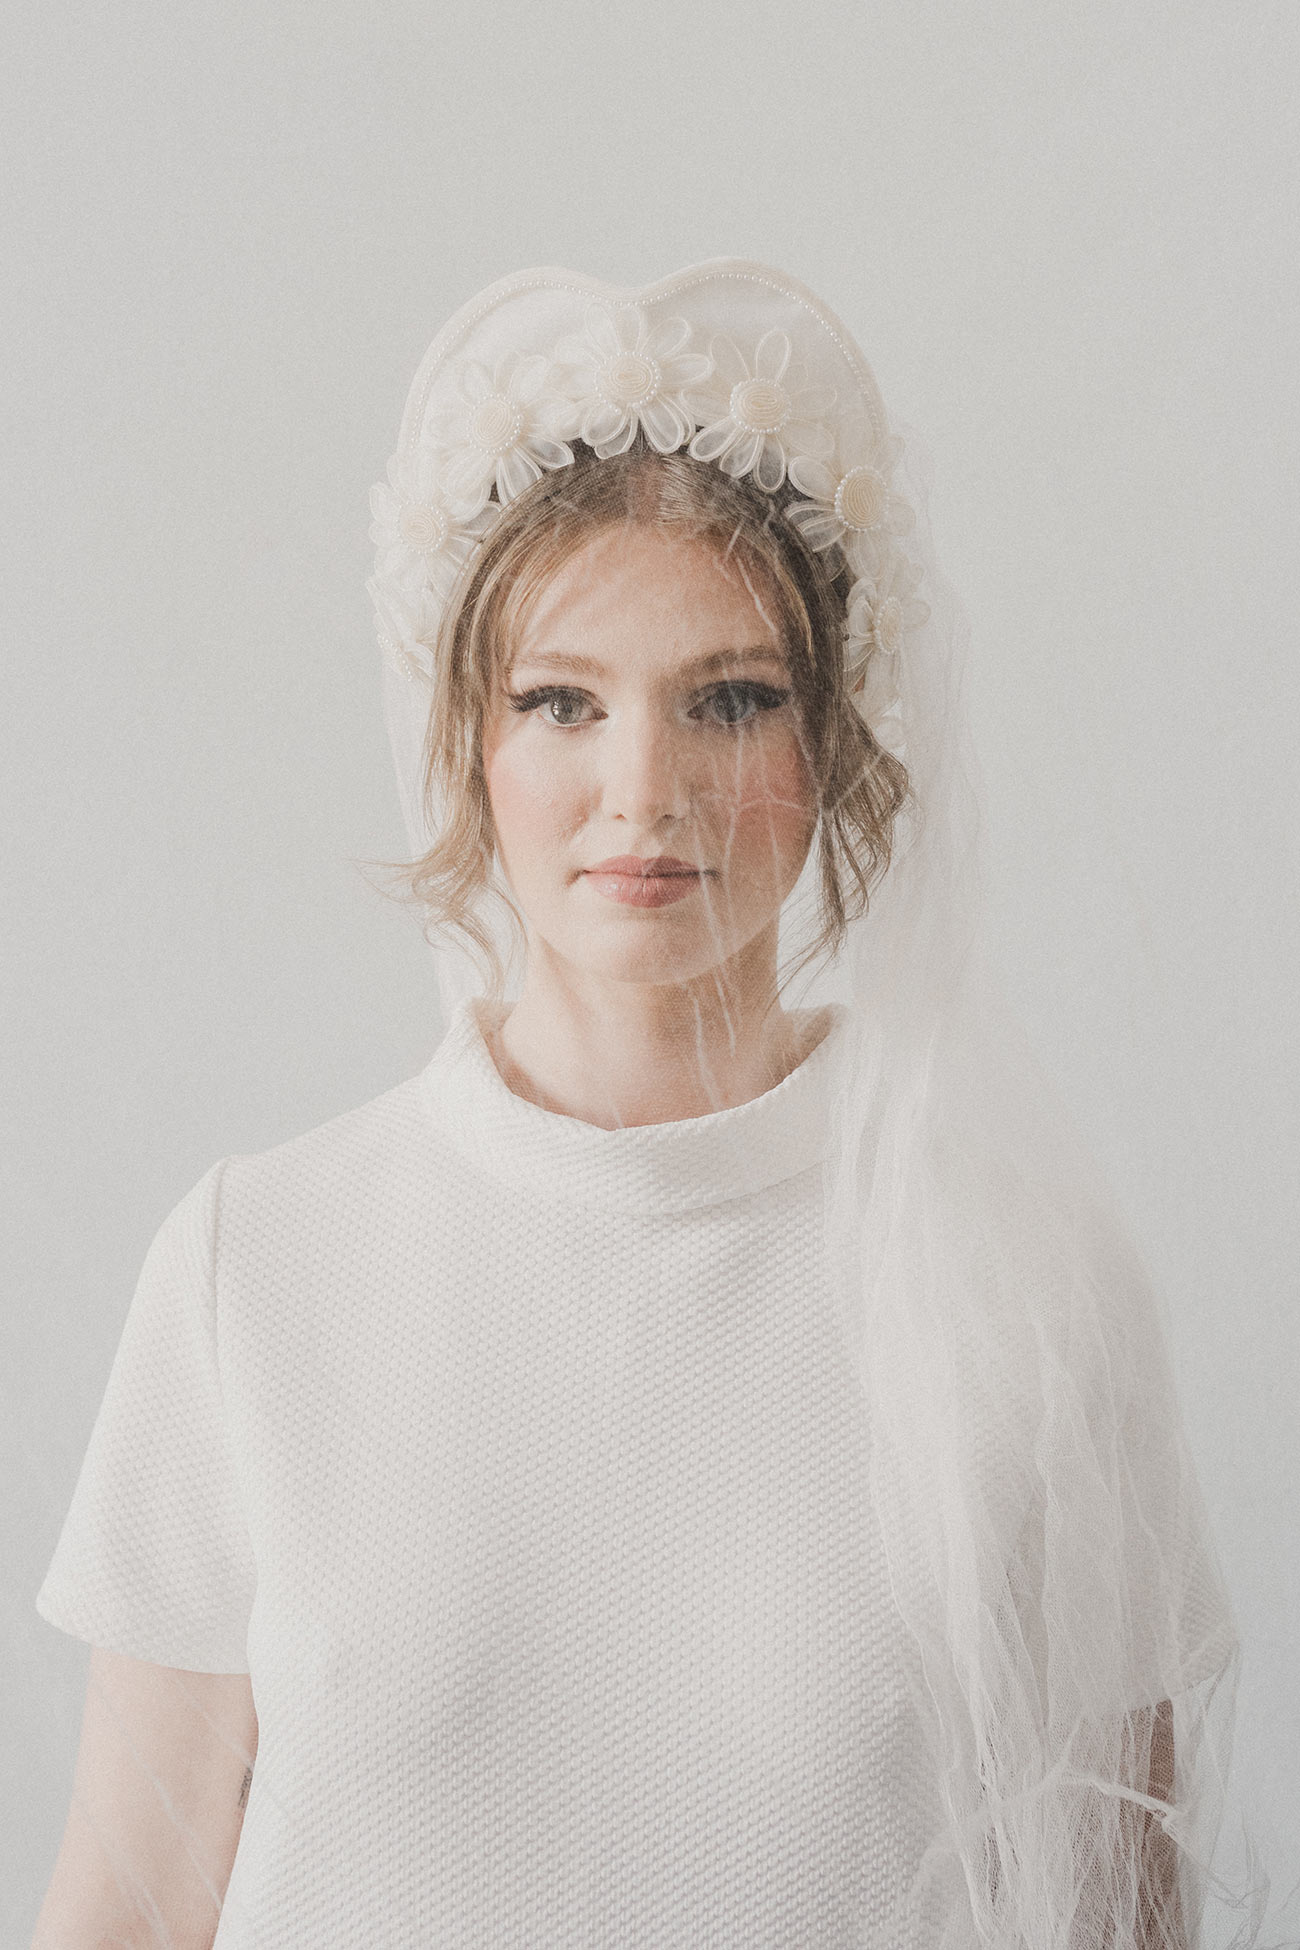 S Inspired Shoot Wed Magazine Bride Dresses